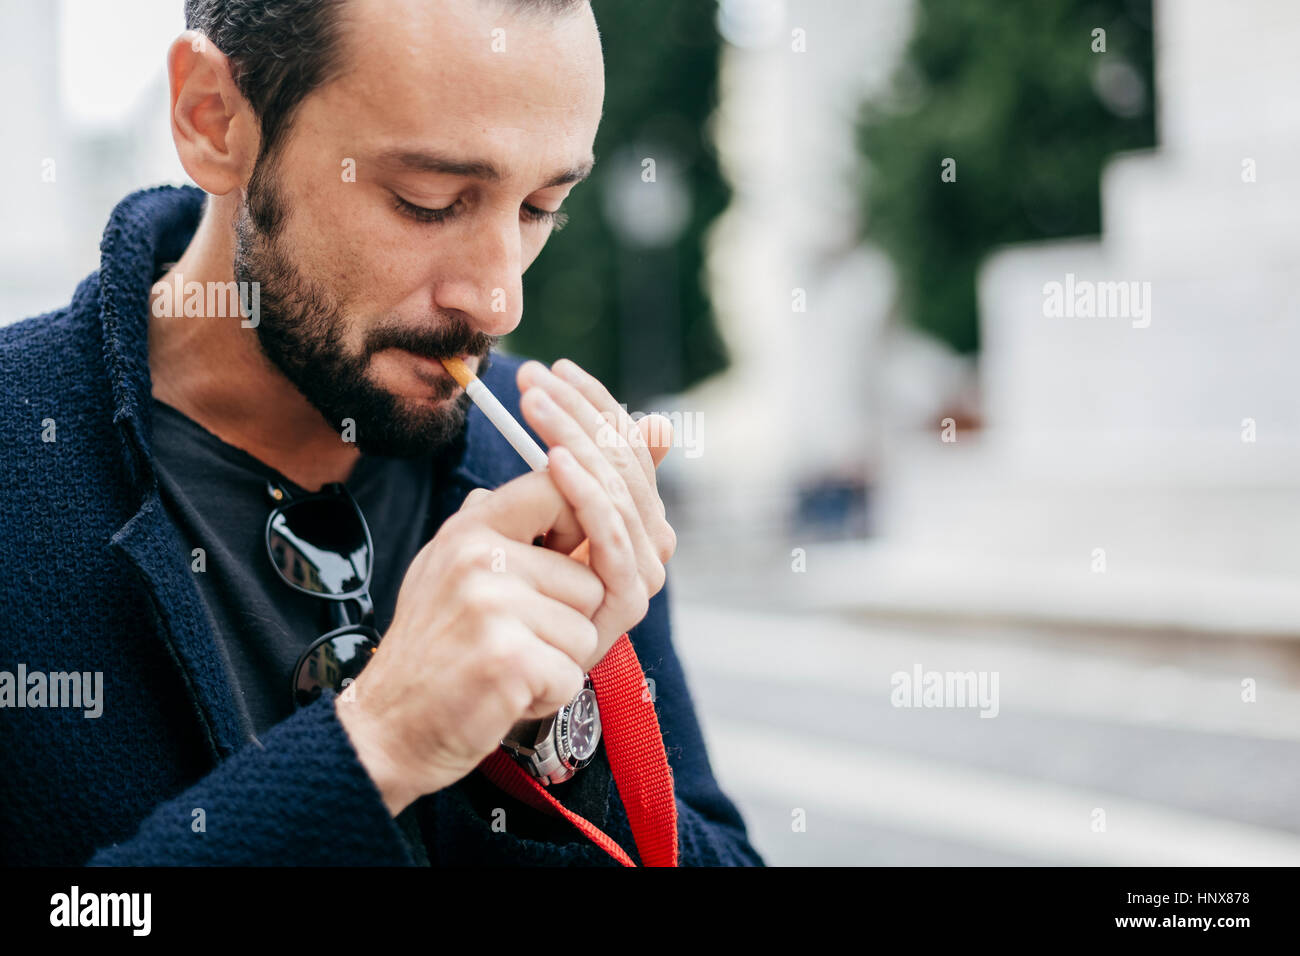 Man smoking cigarette Stock Photo